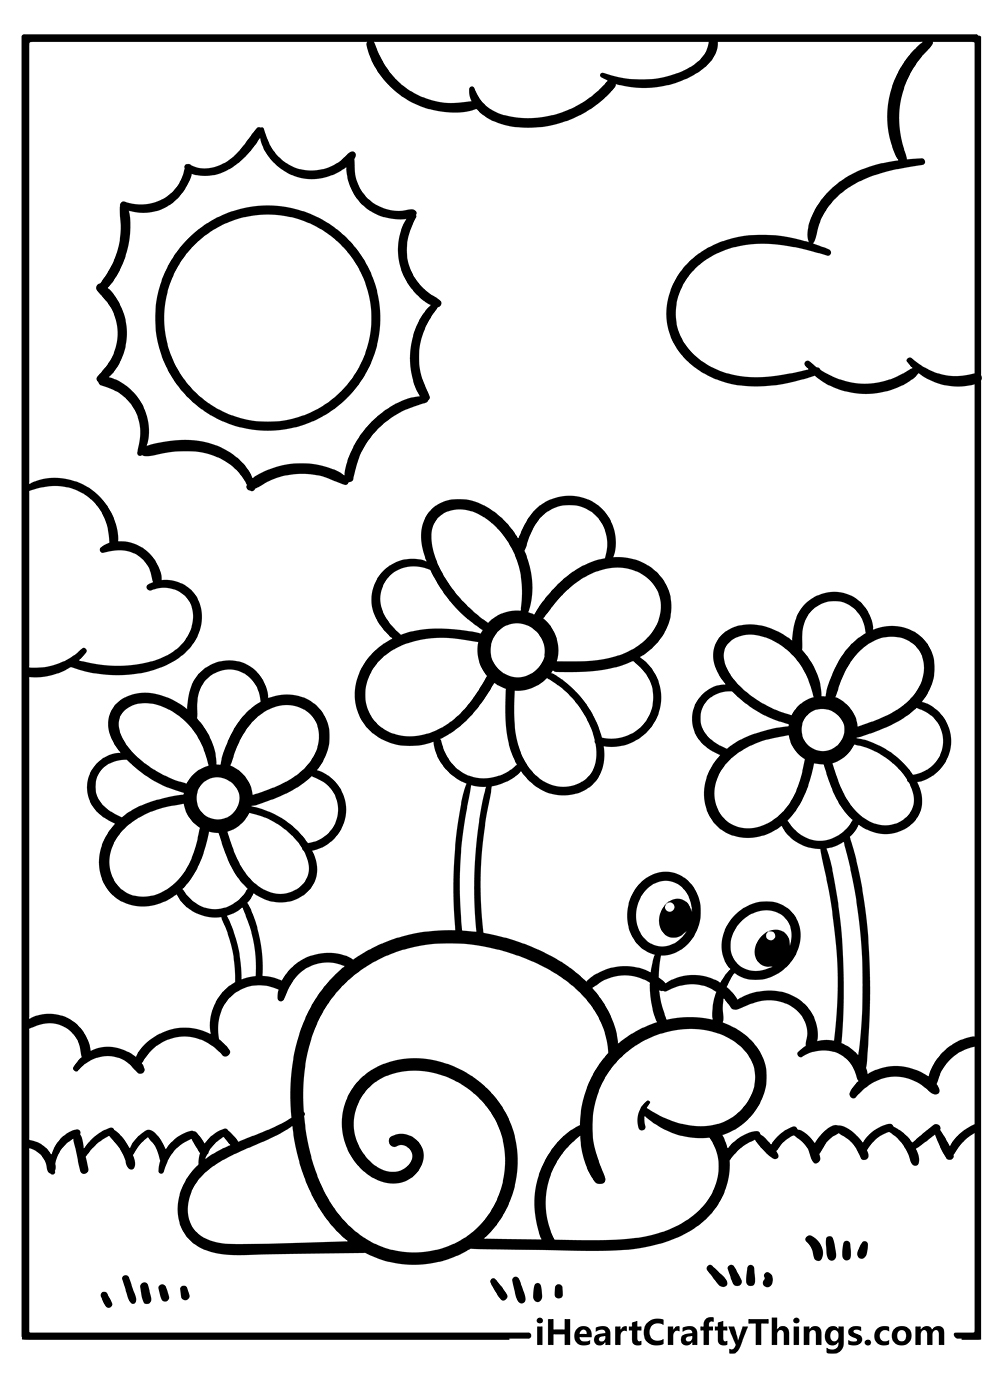 Kindergarten coloring pages free printables